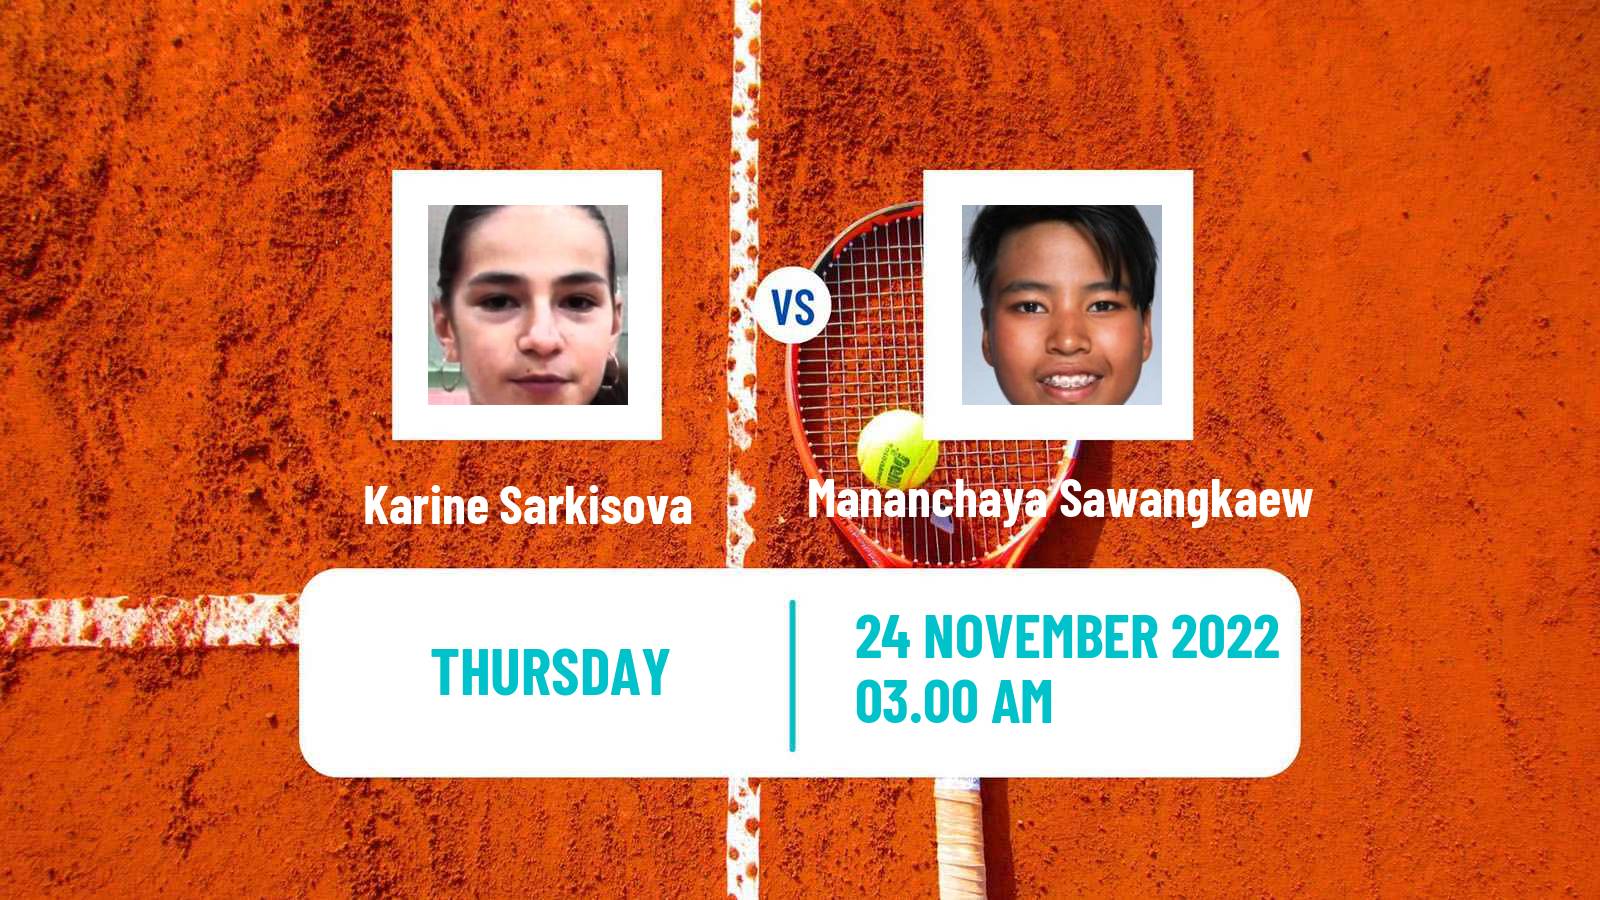 Tennis ITF Tournaments Karine Sarkisova - Mananchaya Sawangkaew